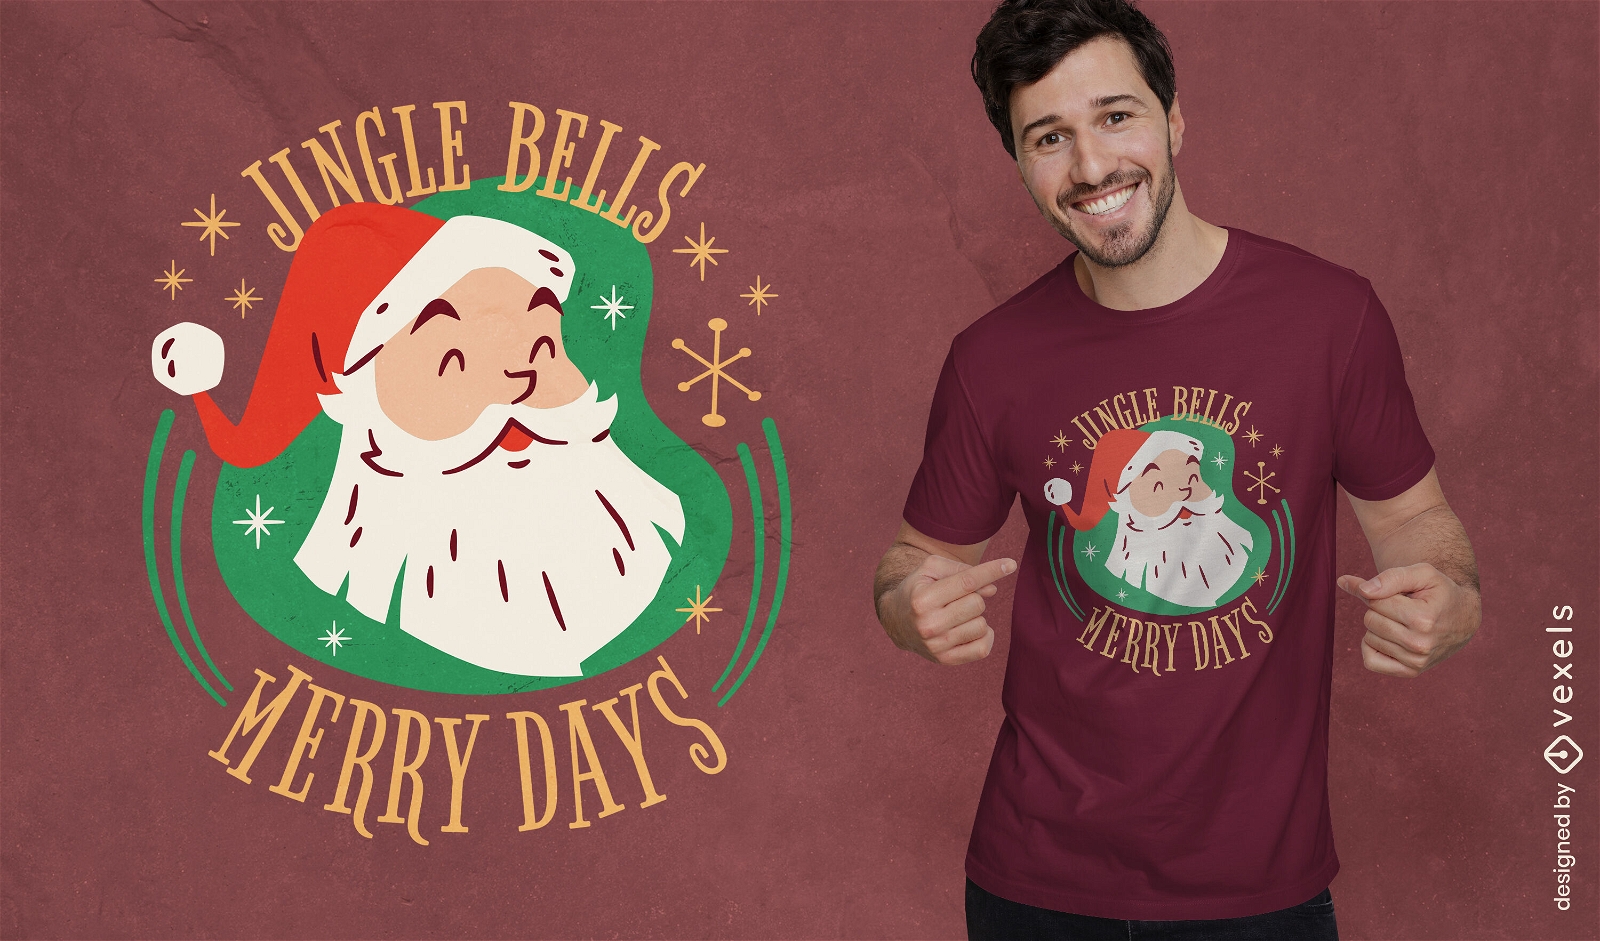 Christmas melodic-themed t-shirt design